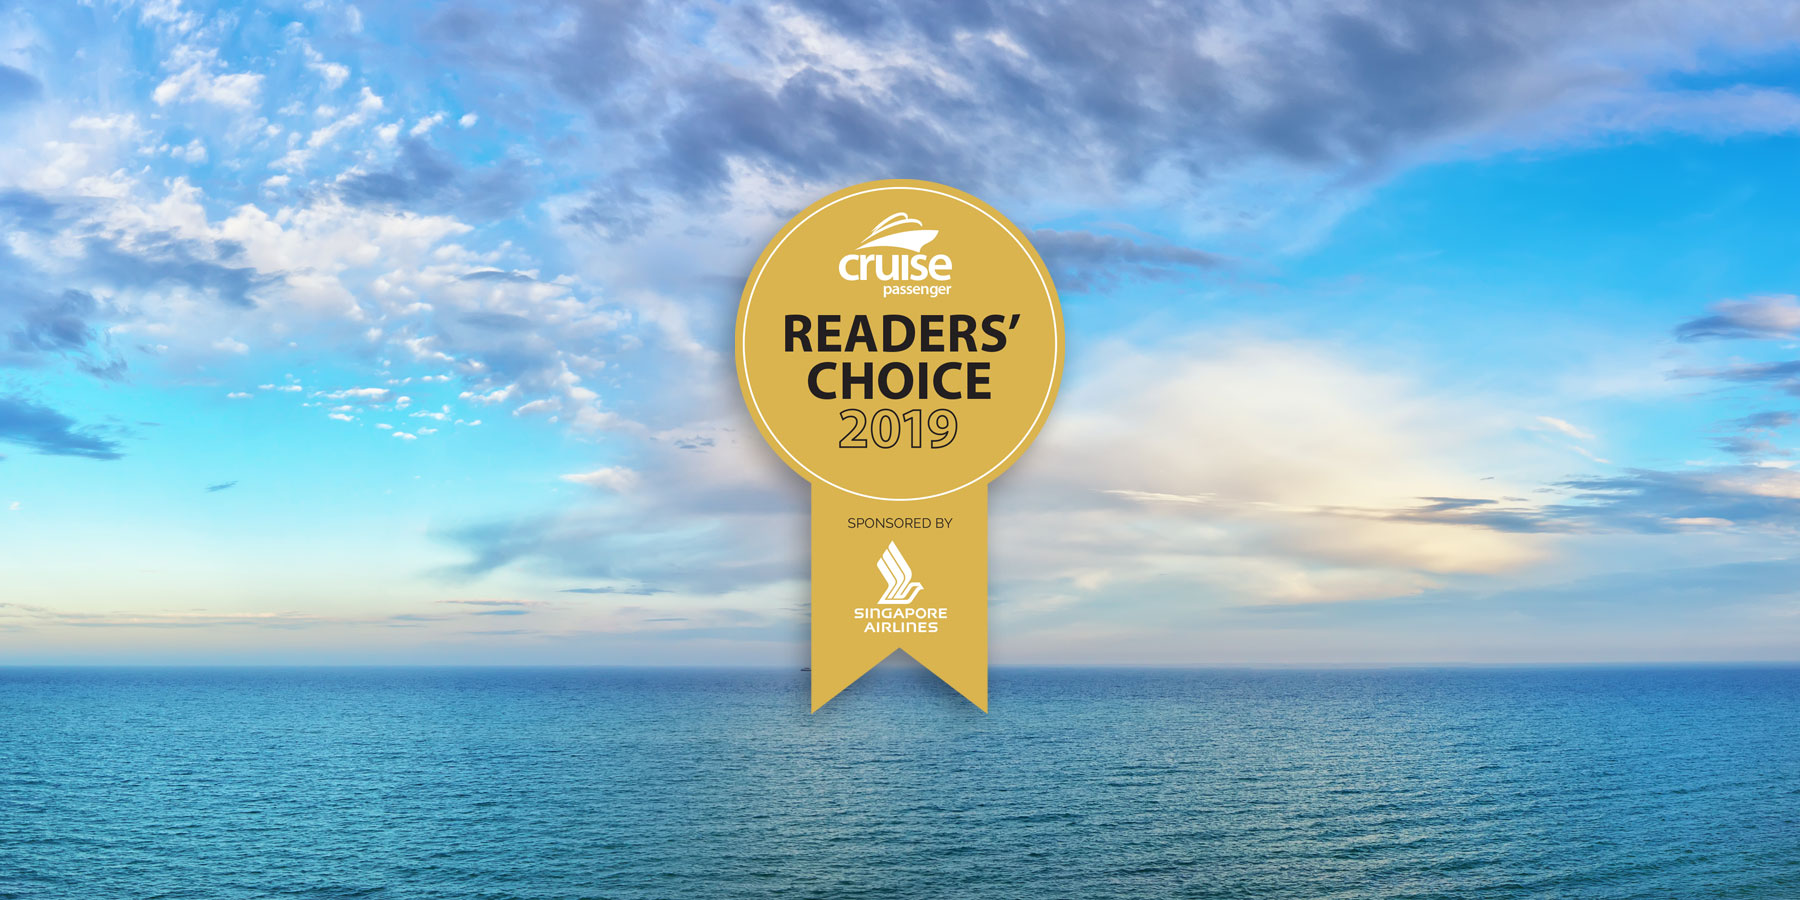 2019 Readers' Choice Awards - Cruise Passenger